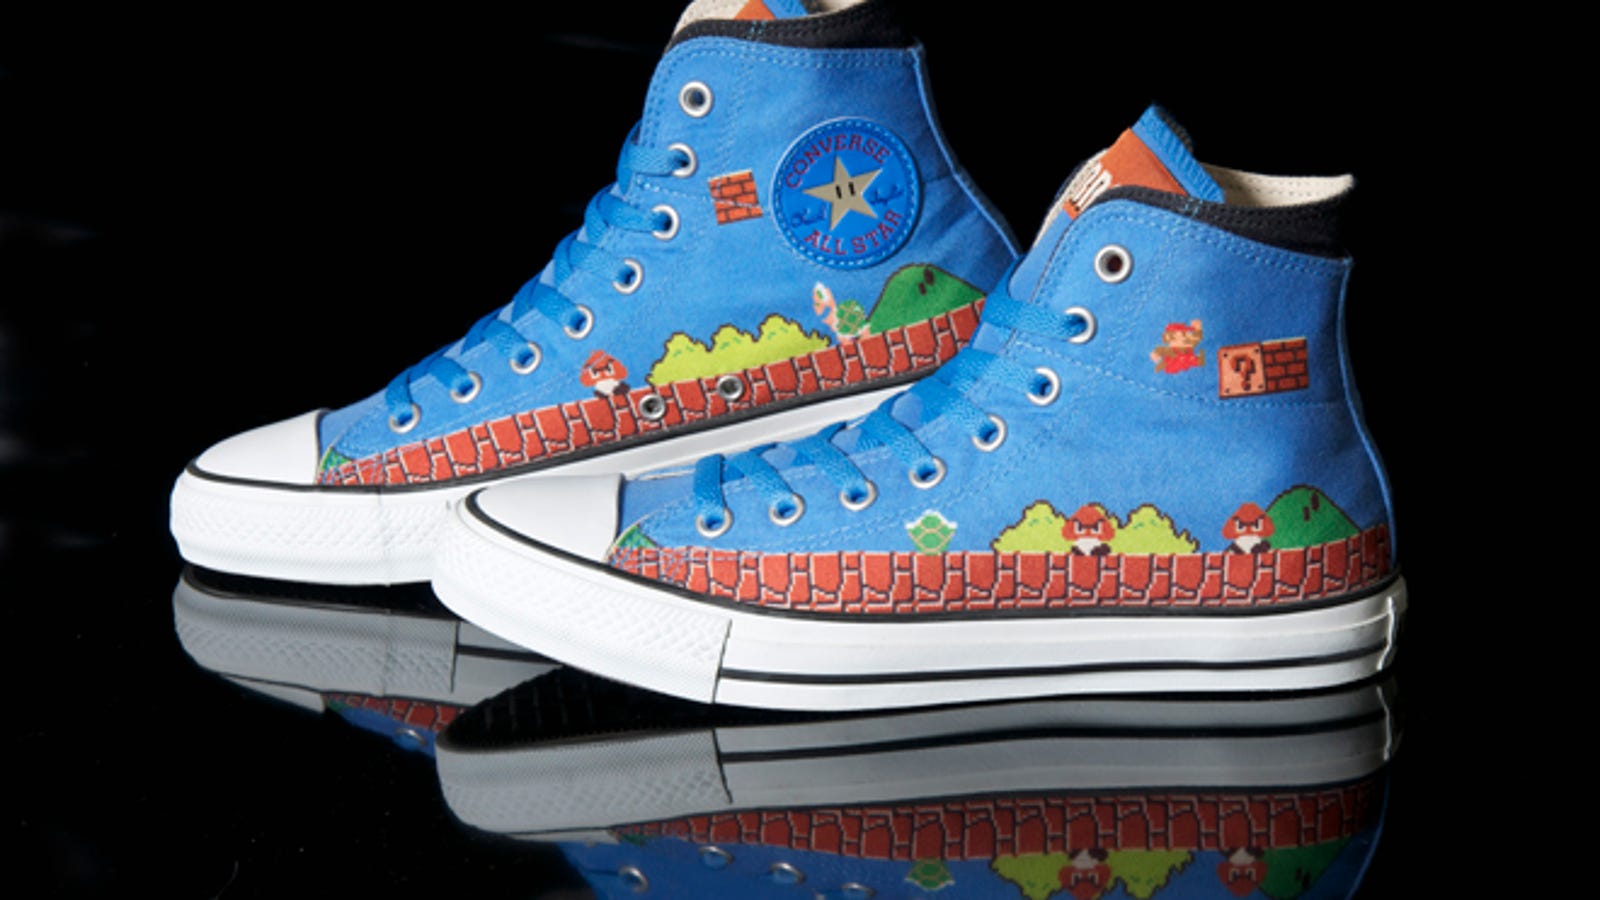 Get A Good Look at Converse's Beautiful Super Mario Bros. Sneakers